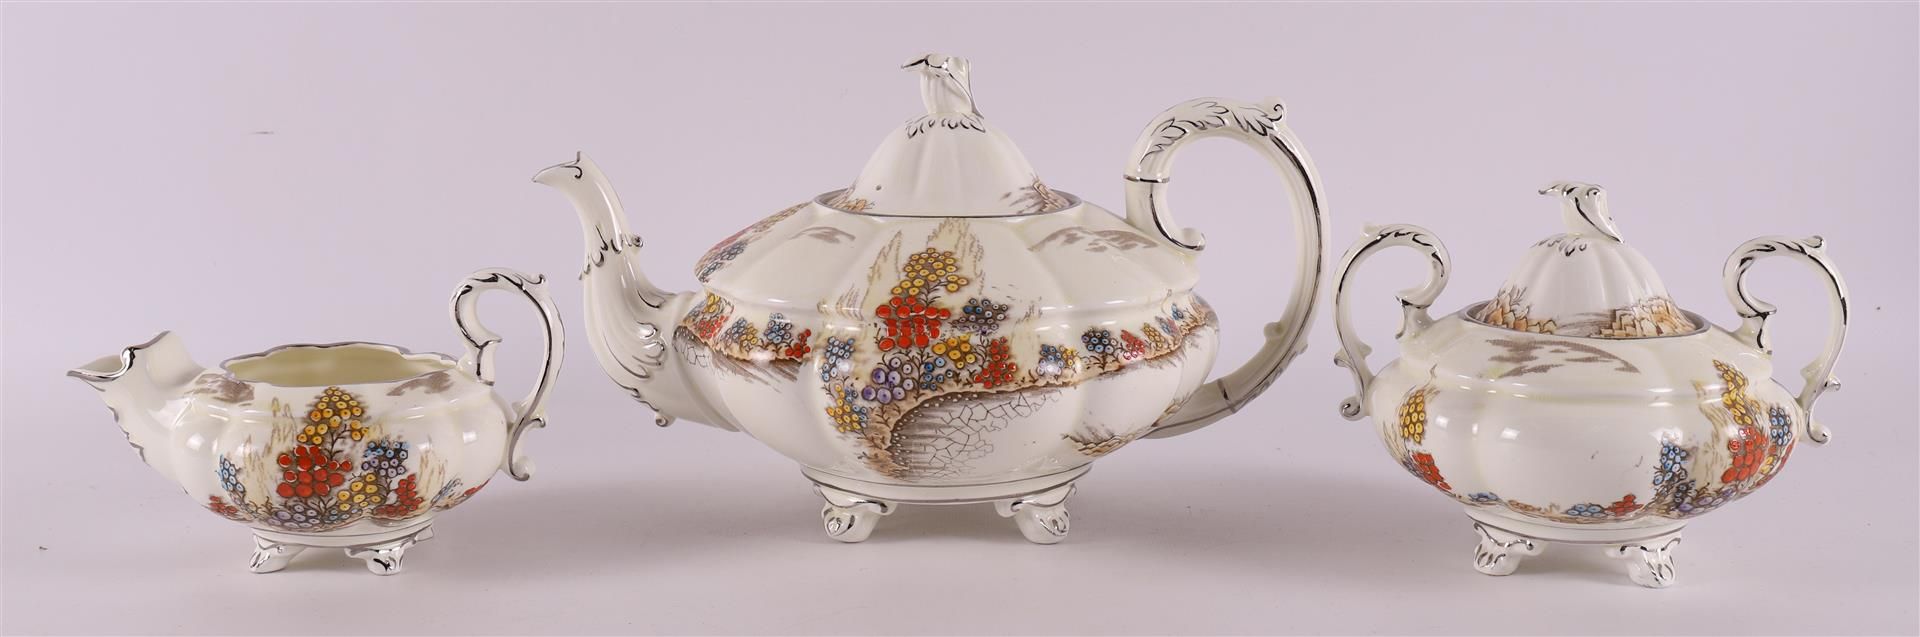 A creamware teapot with sugar bowl and milk jug, England, Stafford, 20th century